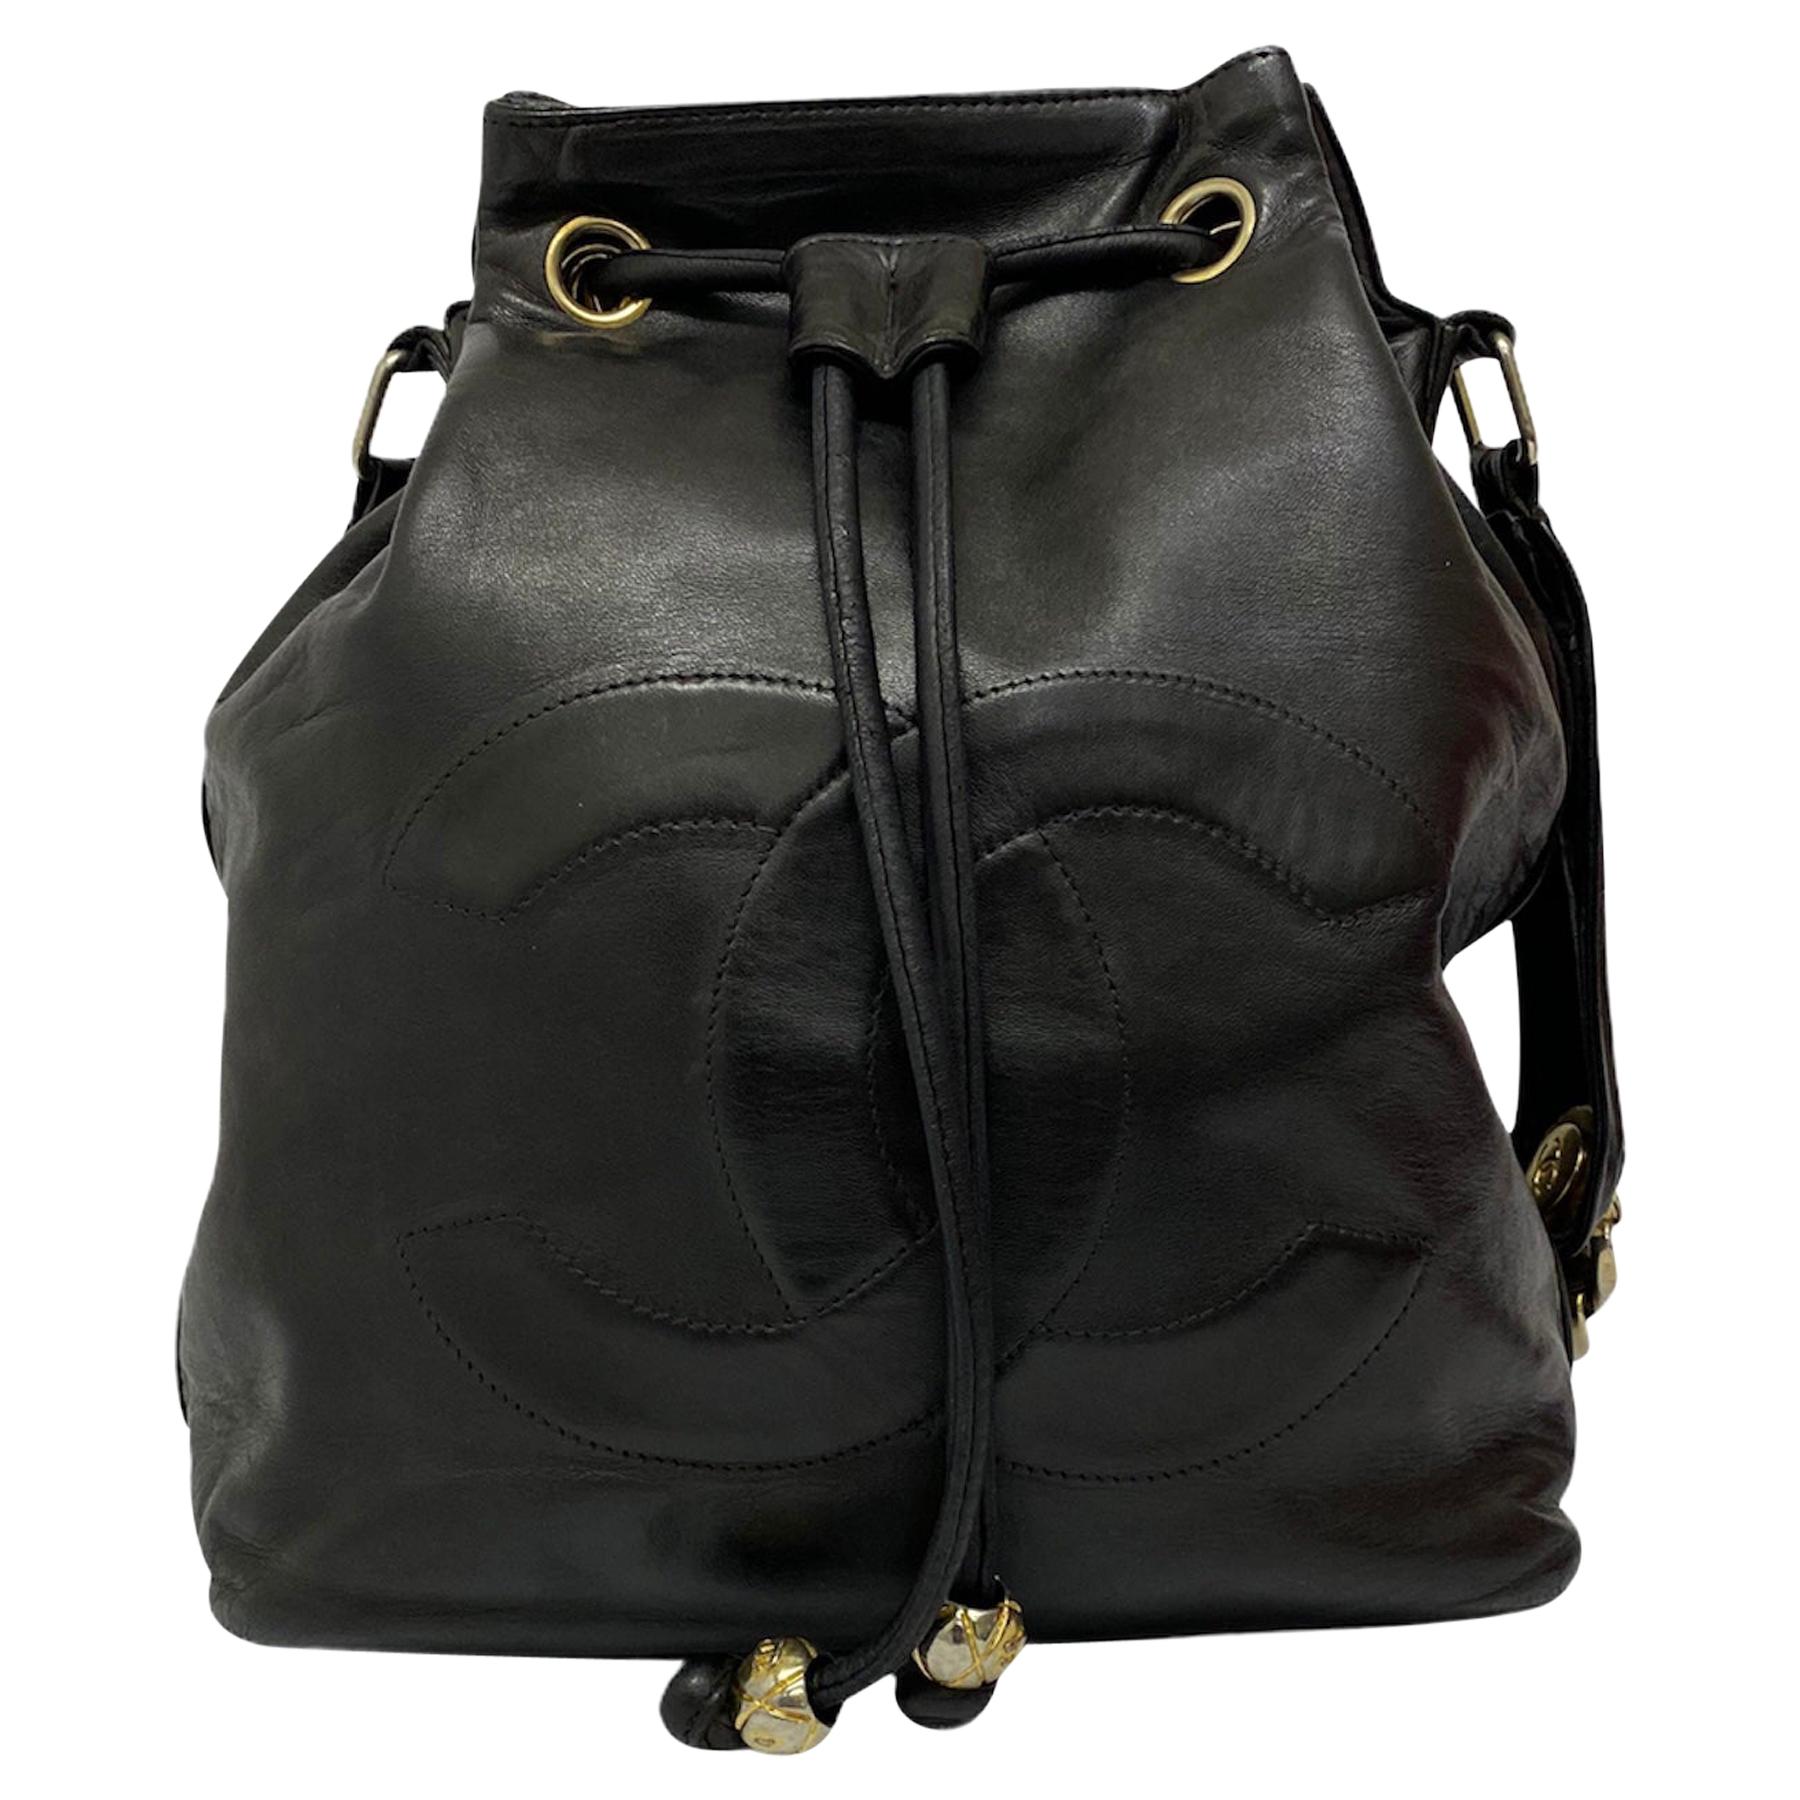 Chanel Vintage Bucket Bag in Black Leather with Golden Hardware